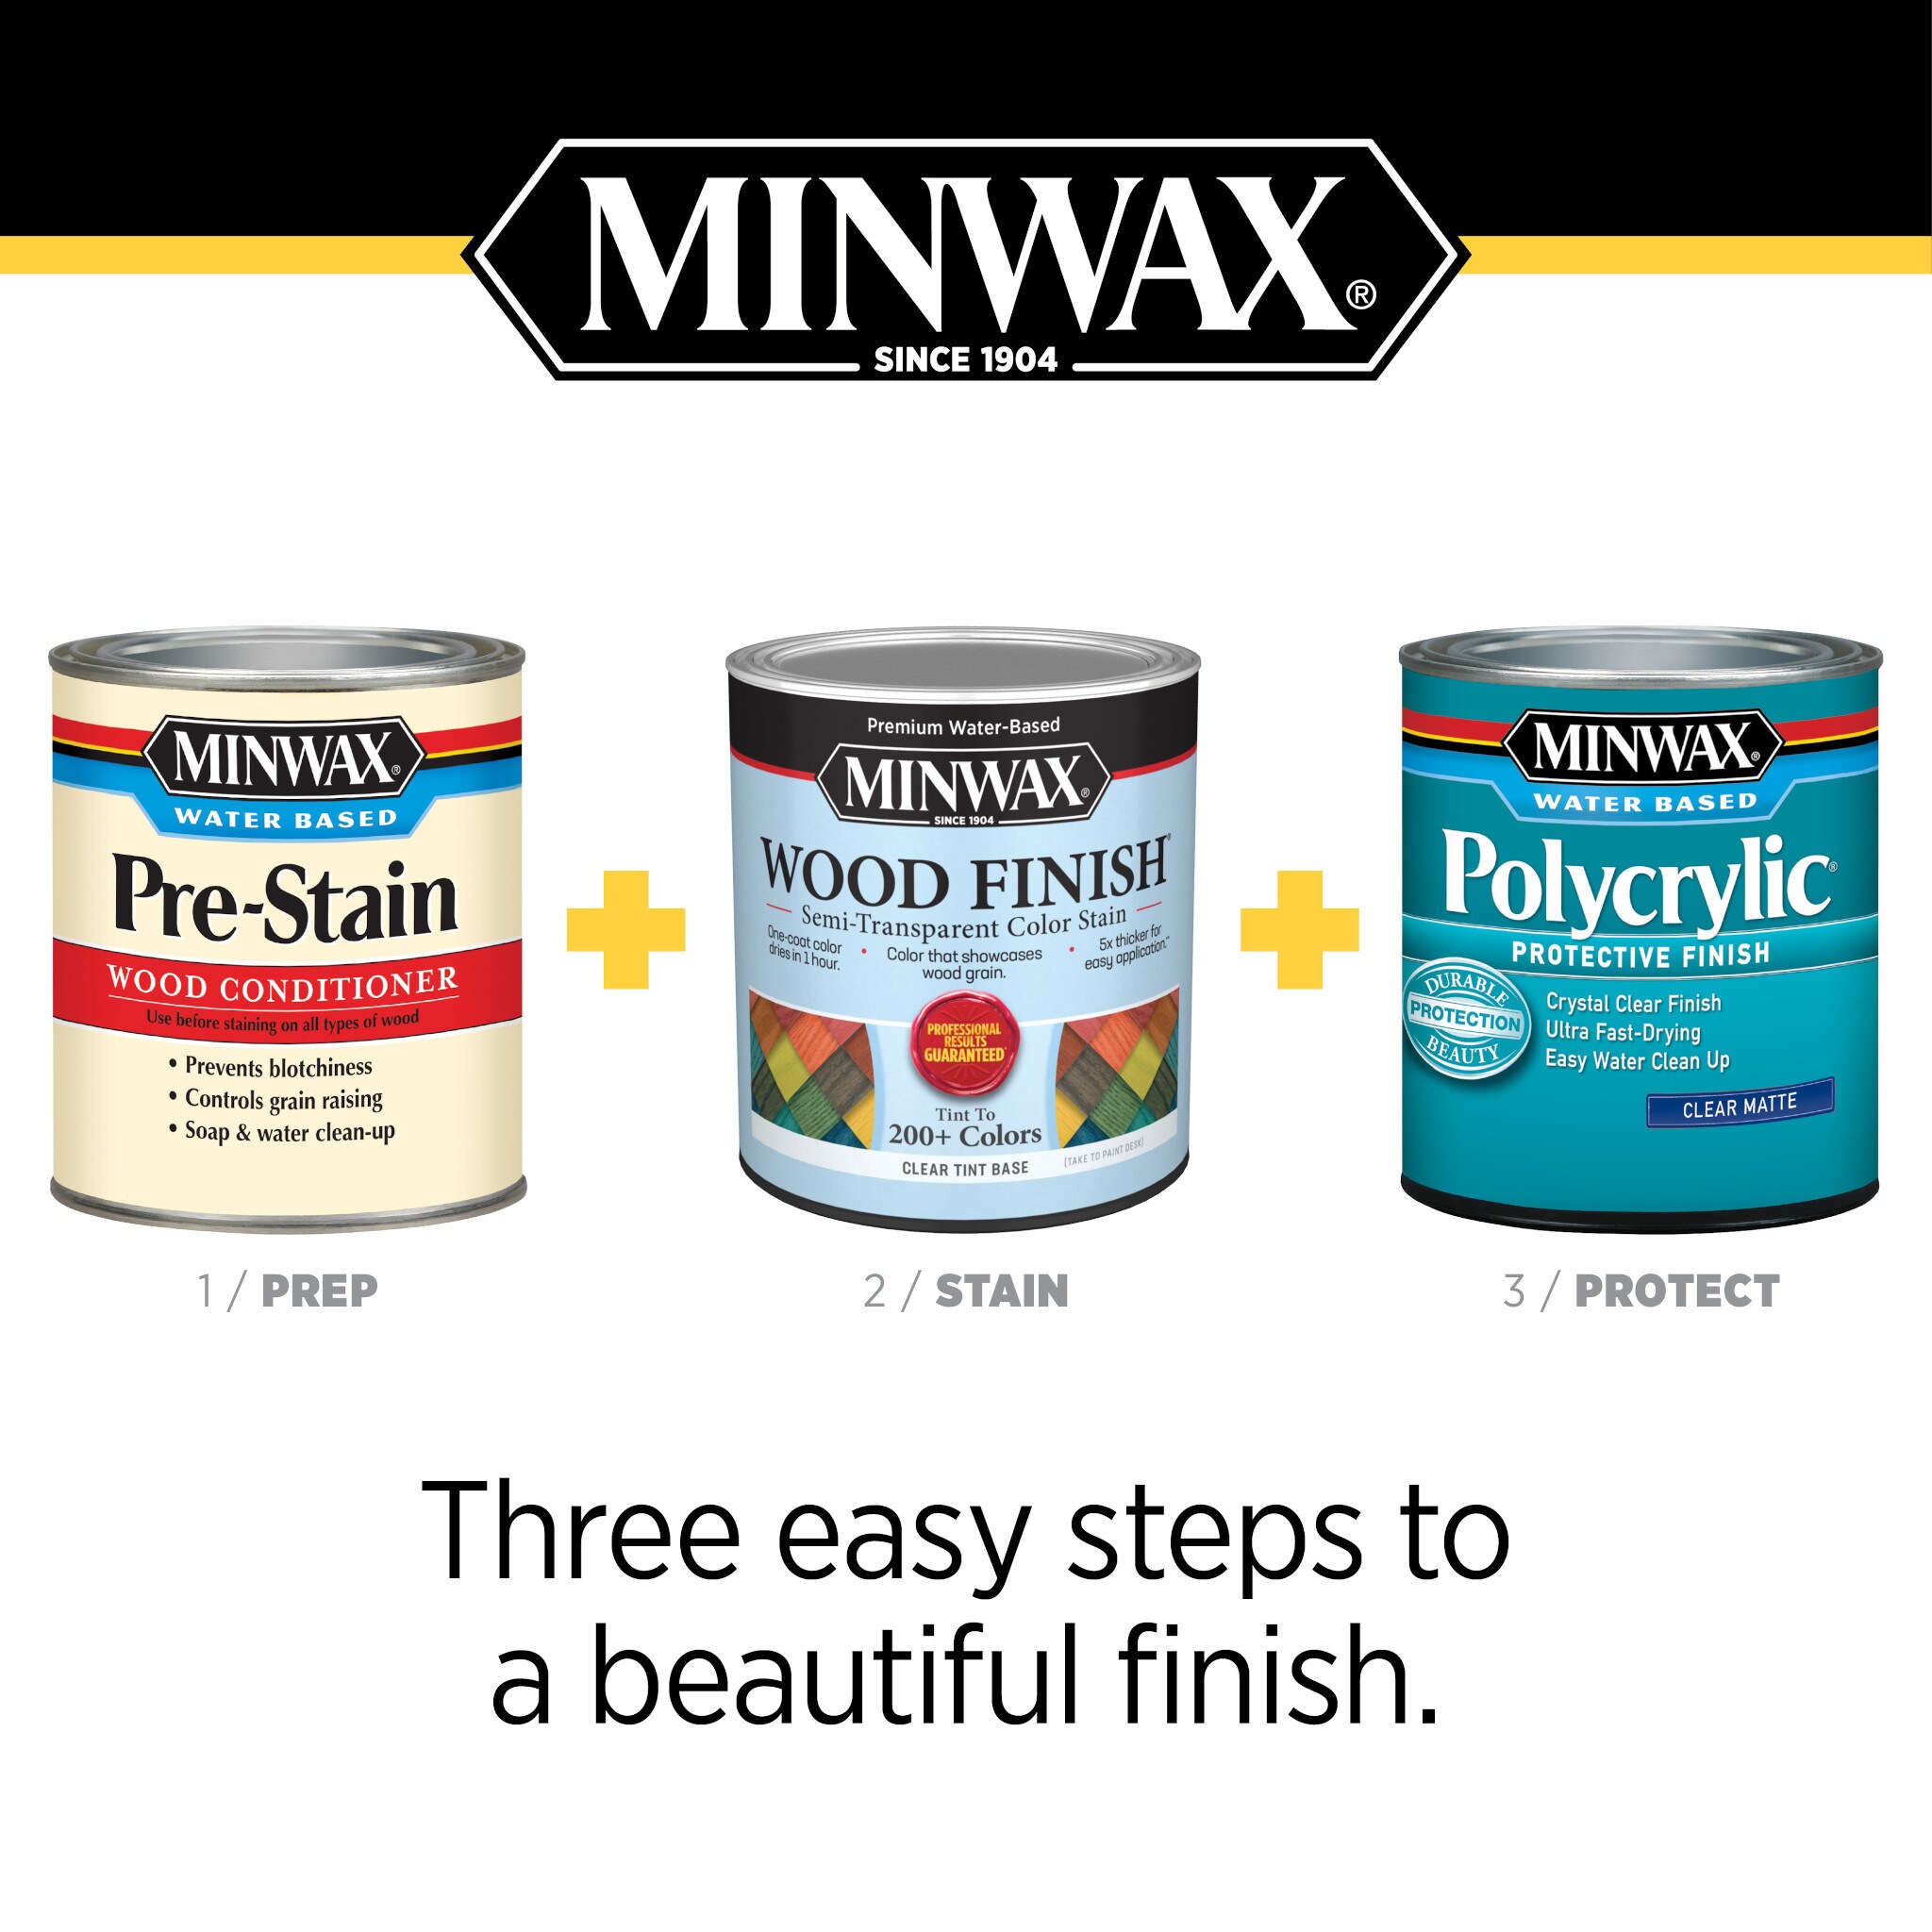 Minwax .50 Pint Gloss Polycrylic Protective Finishes 25555 